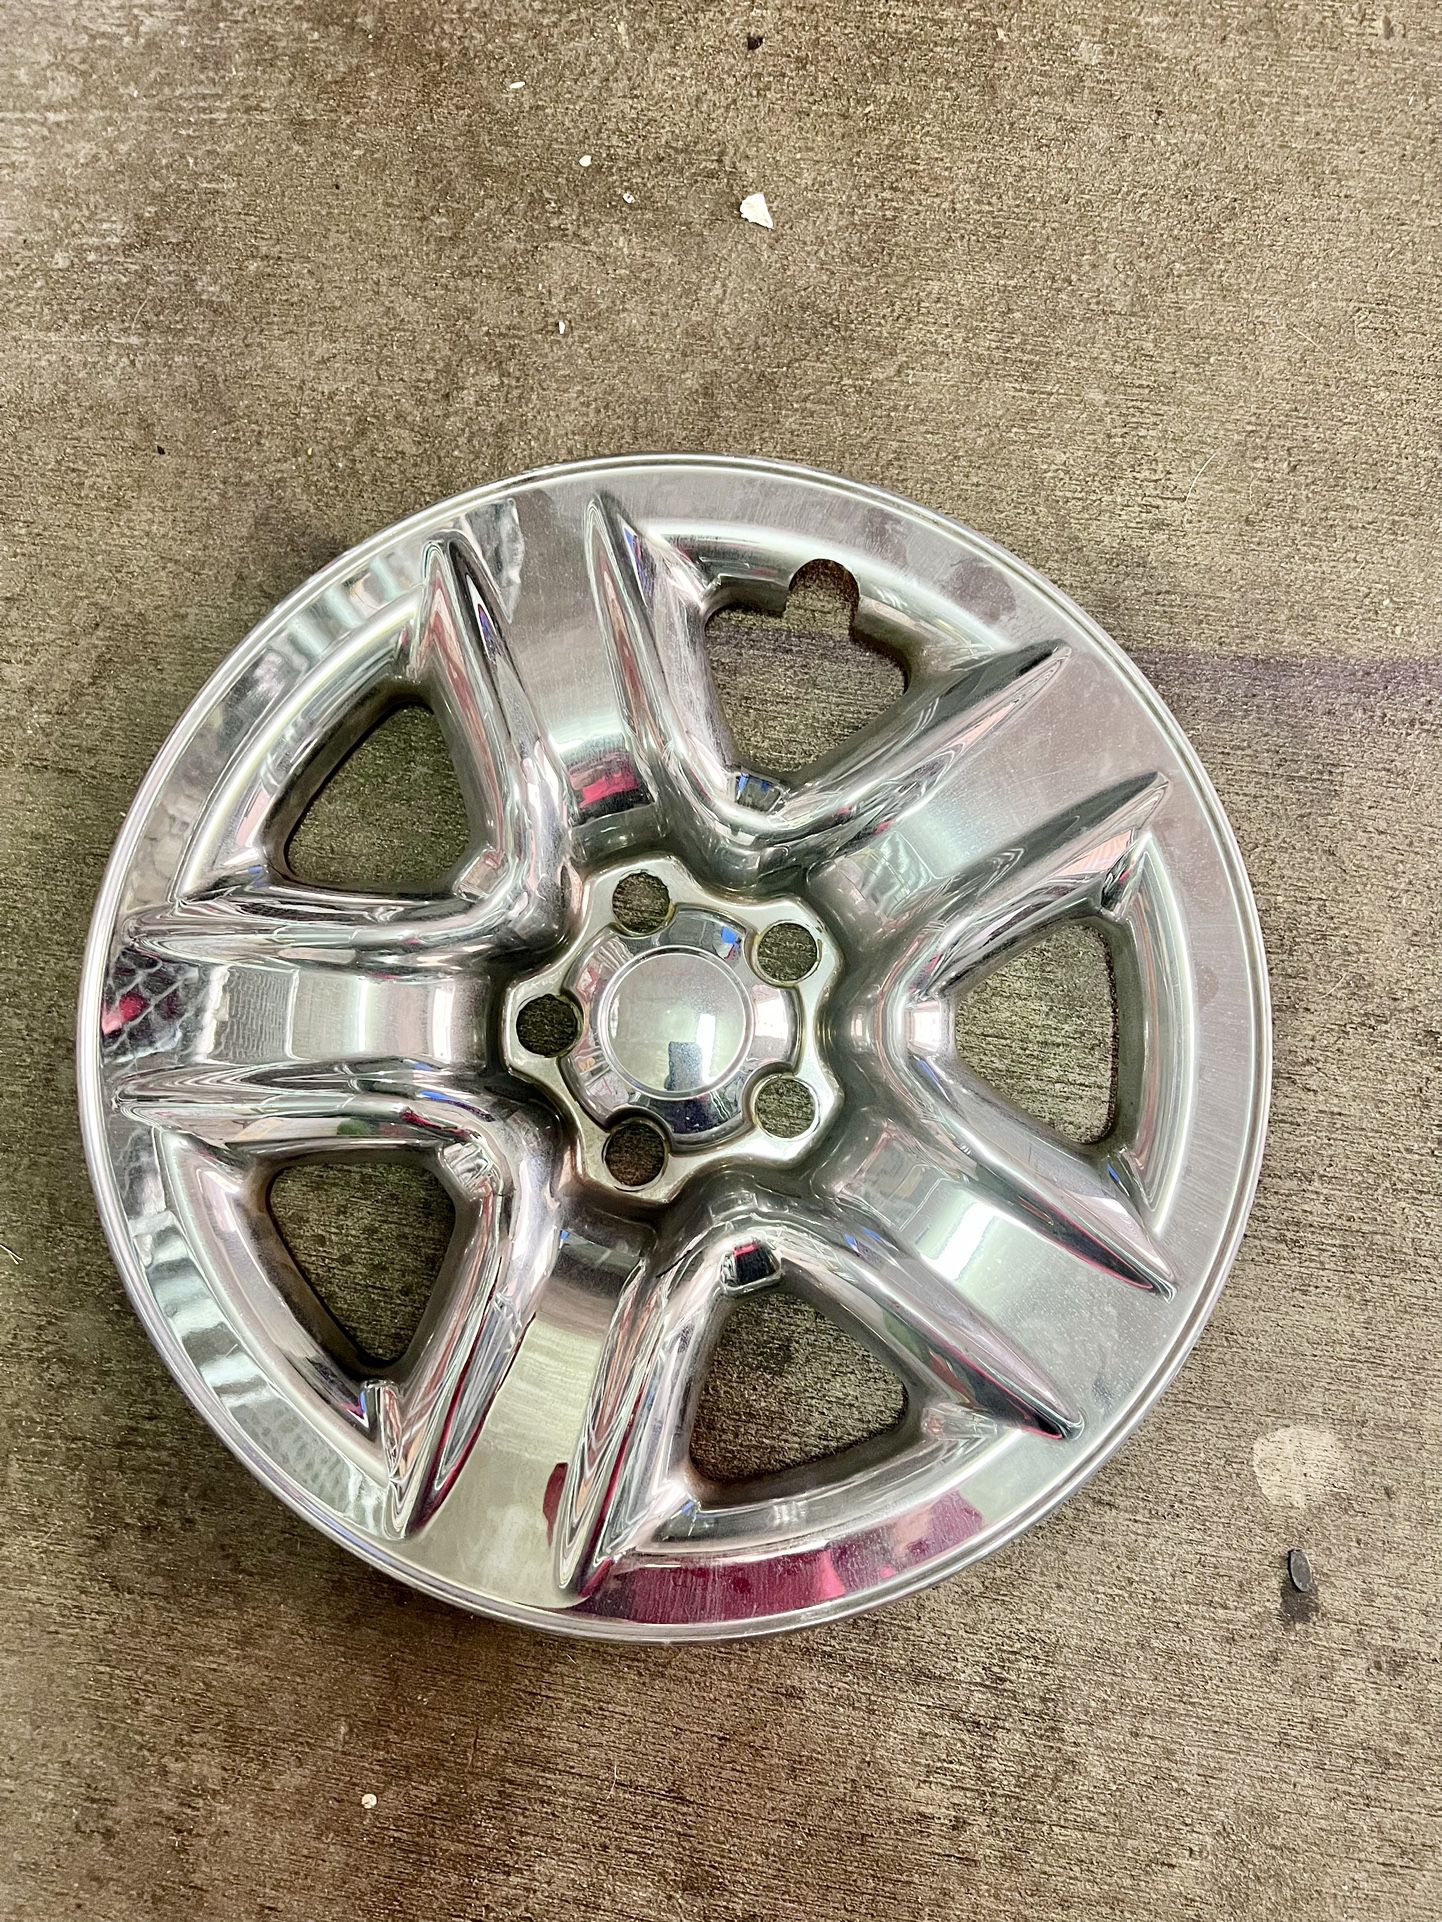 3-hubcaps Rav4 Rim Covers